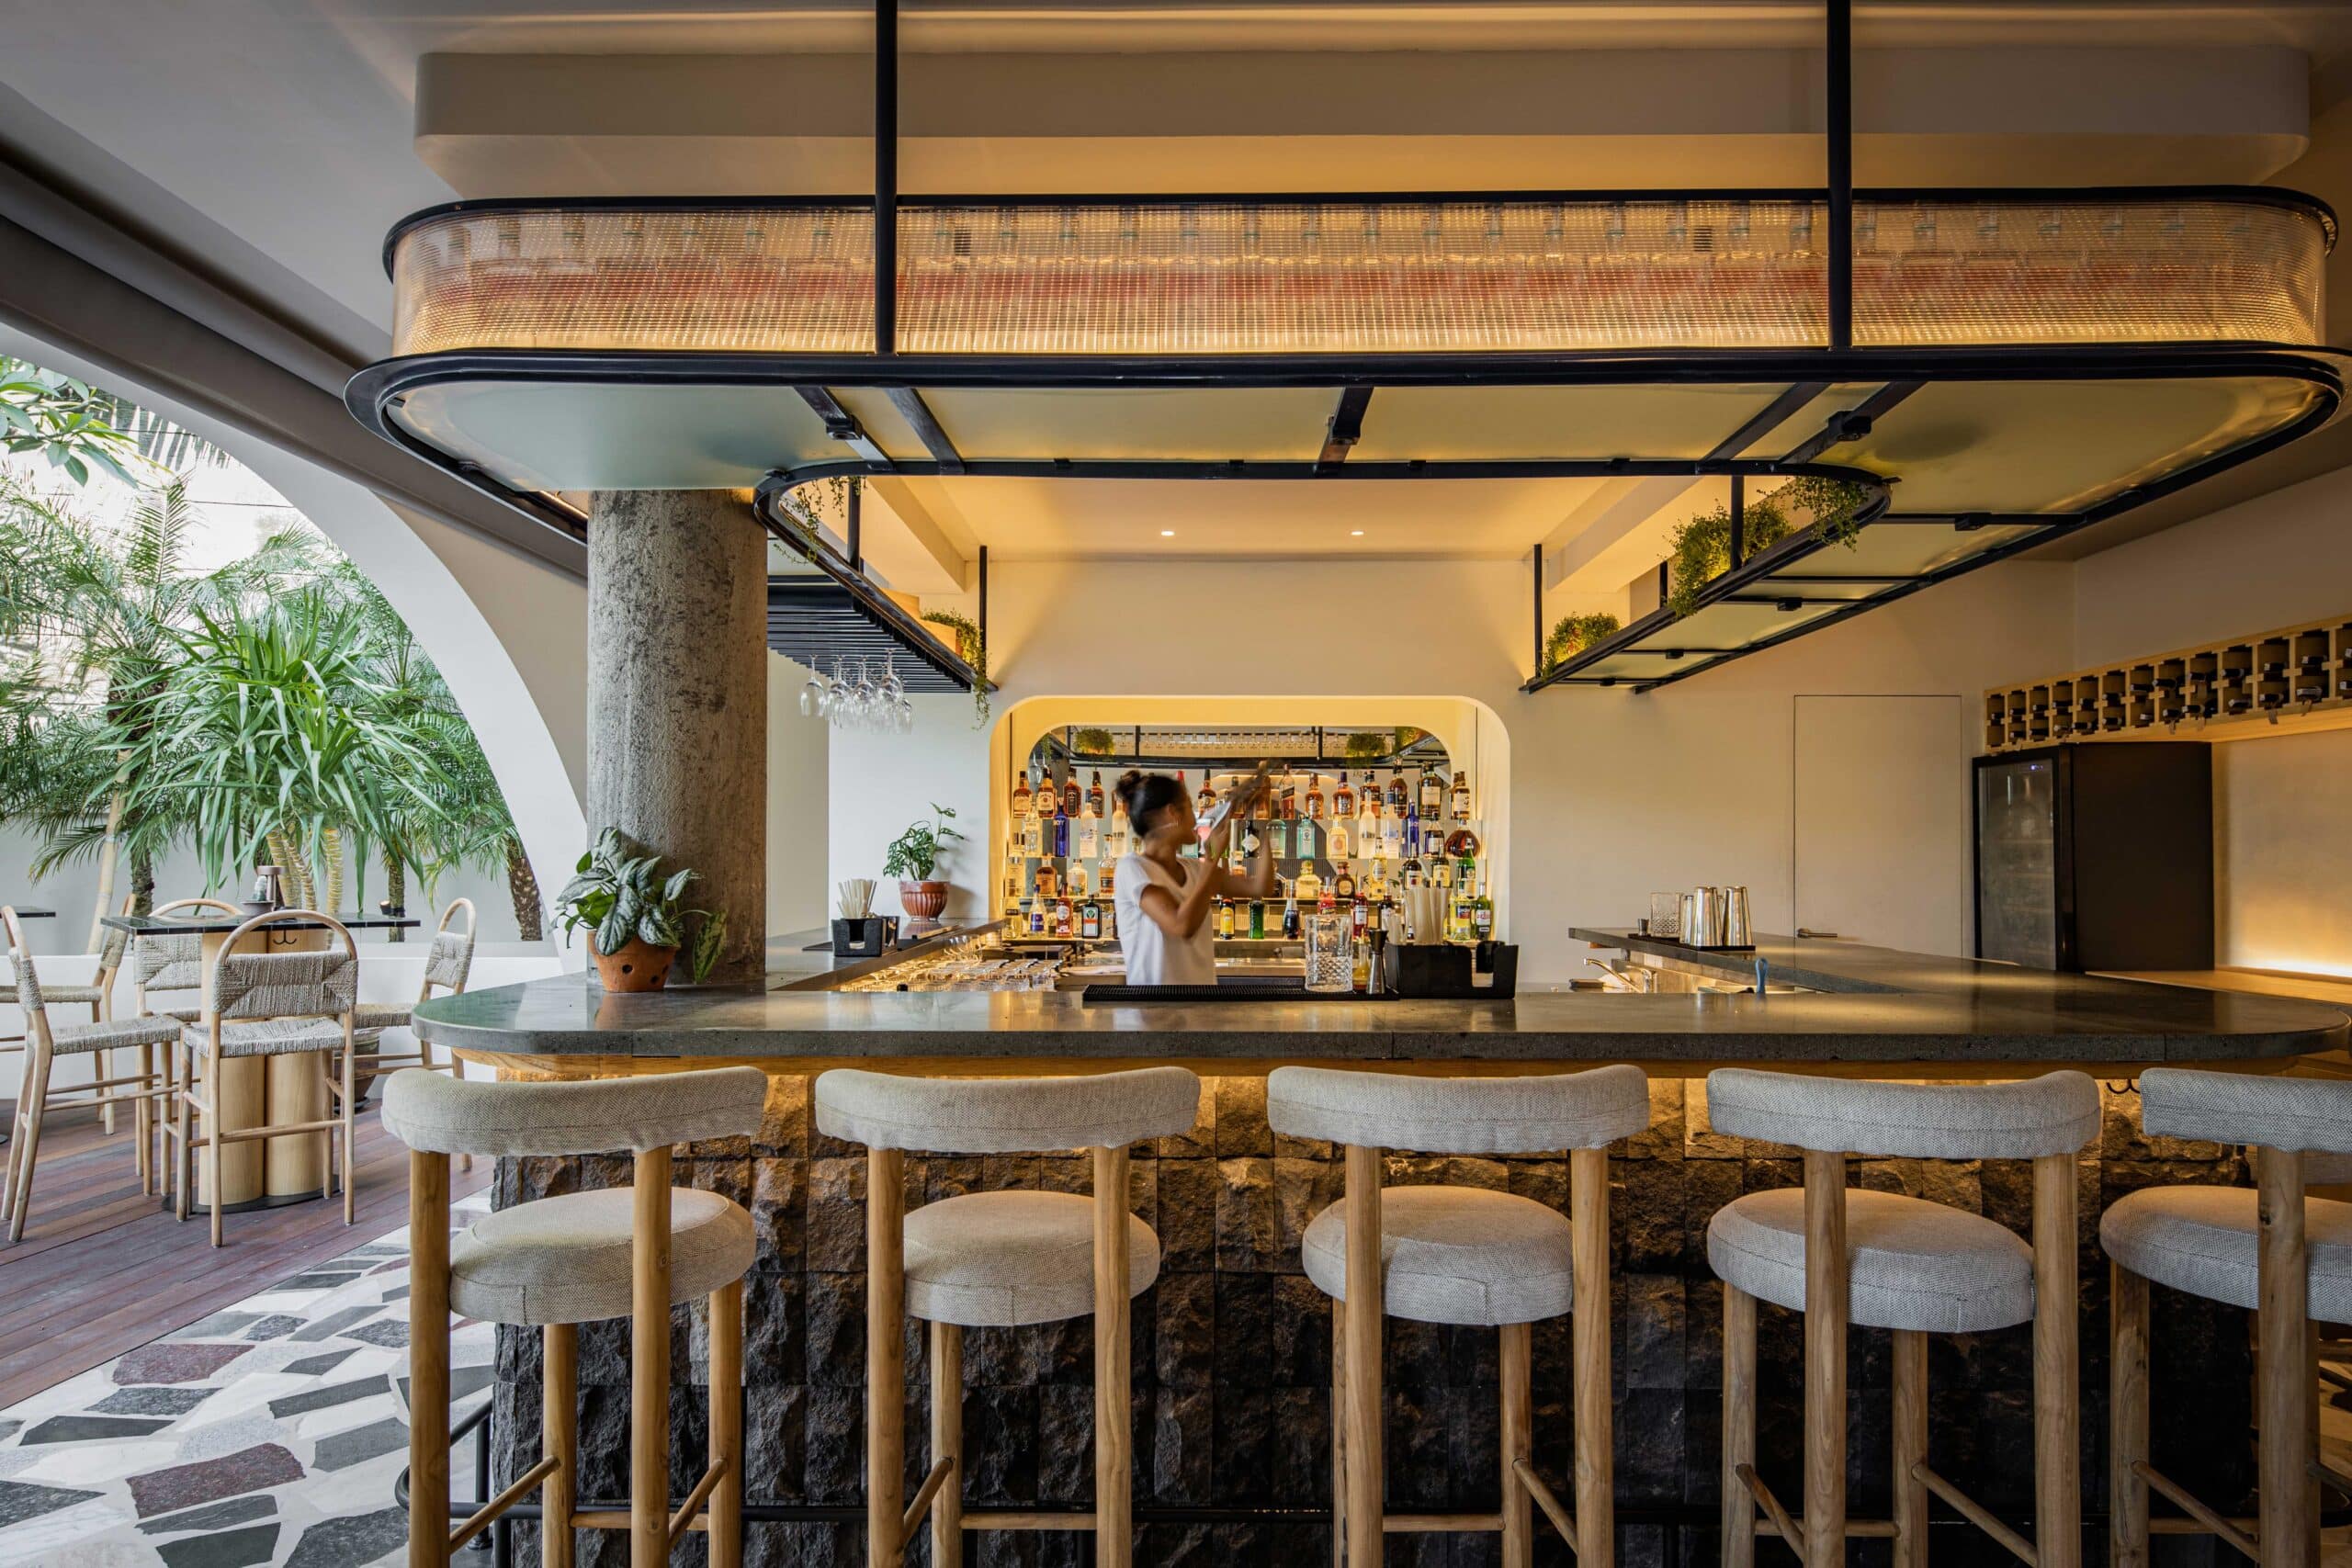 Restaurant Design - Luma Bali - Interior Design - Architecture - Architect Bali - Bar Design